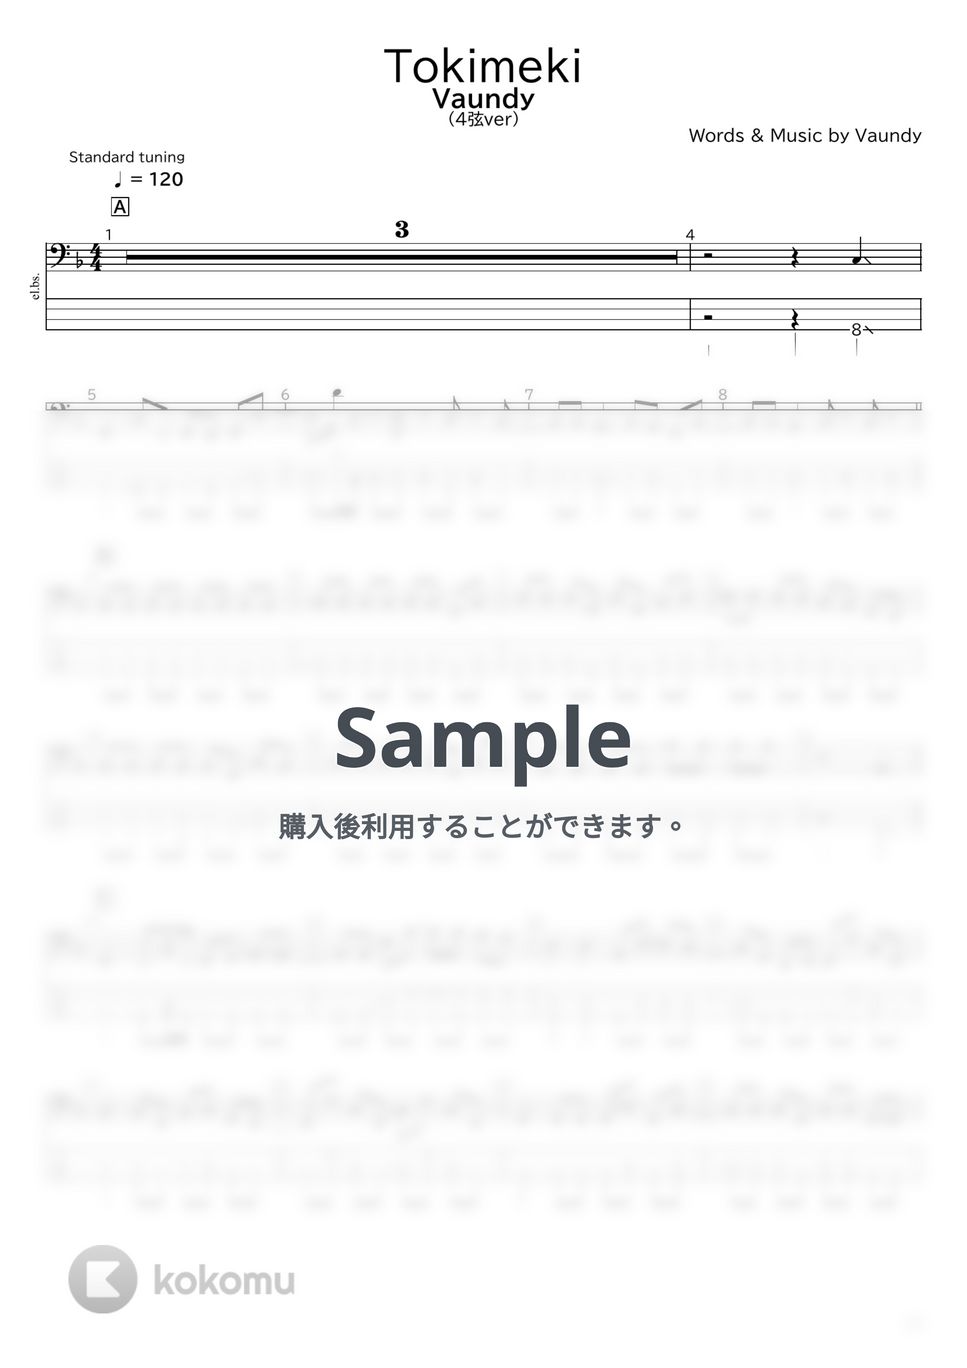 Vaundy - Tokimeki(4弦ver) by たぶべー@財布に優しいベース用楽譜屋さん